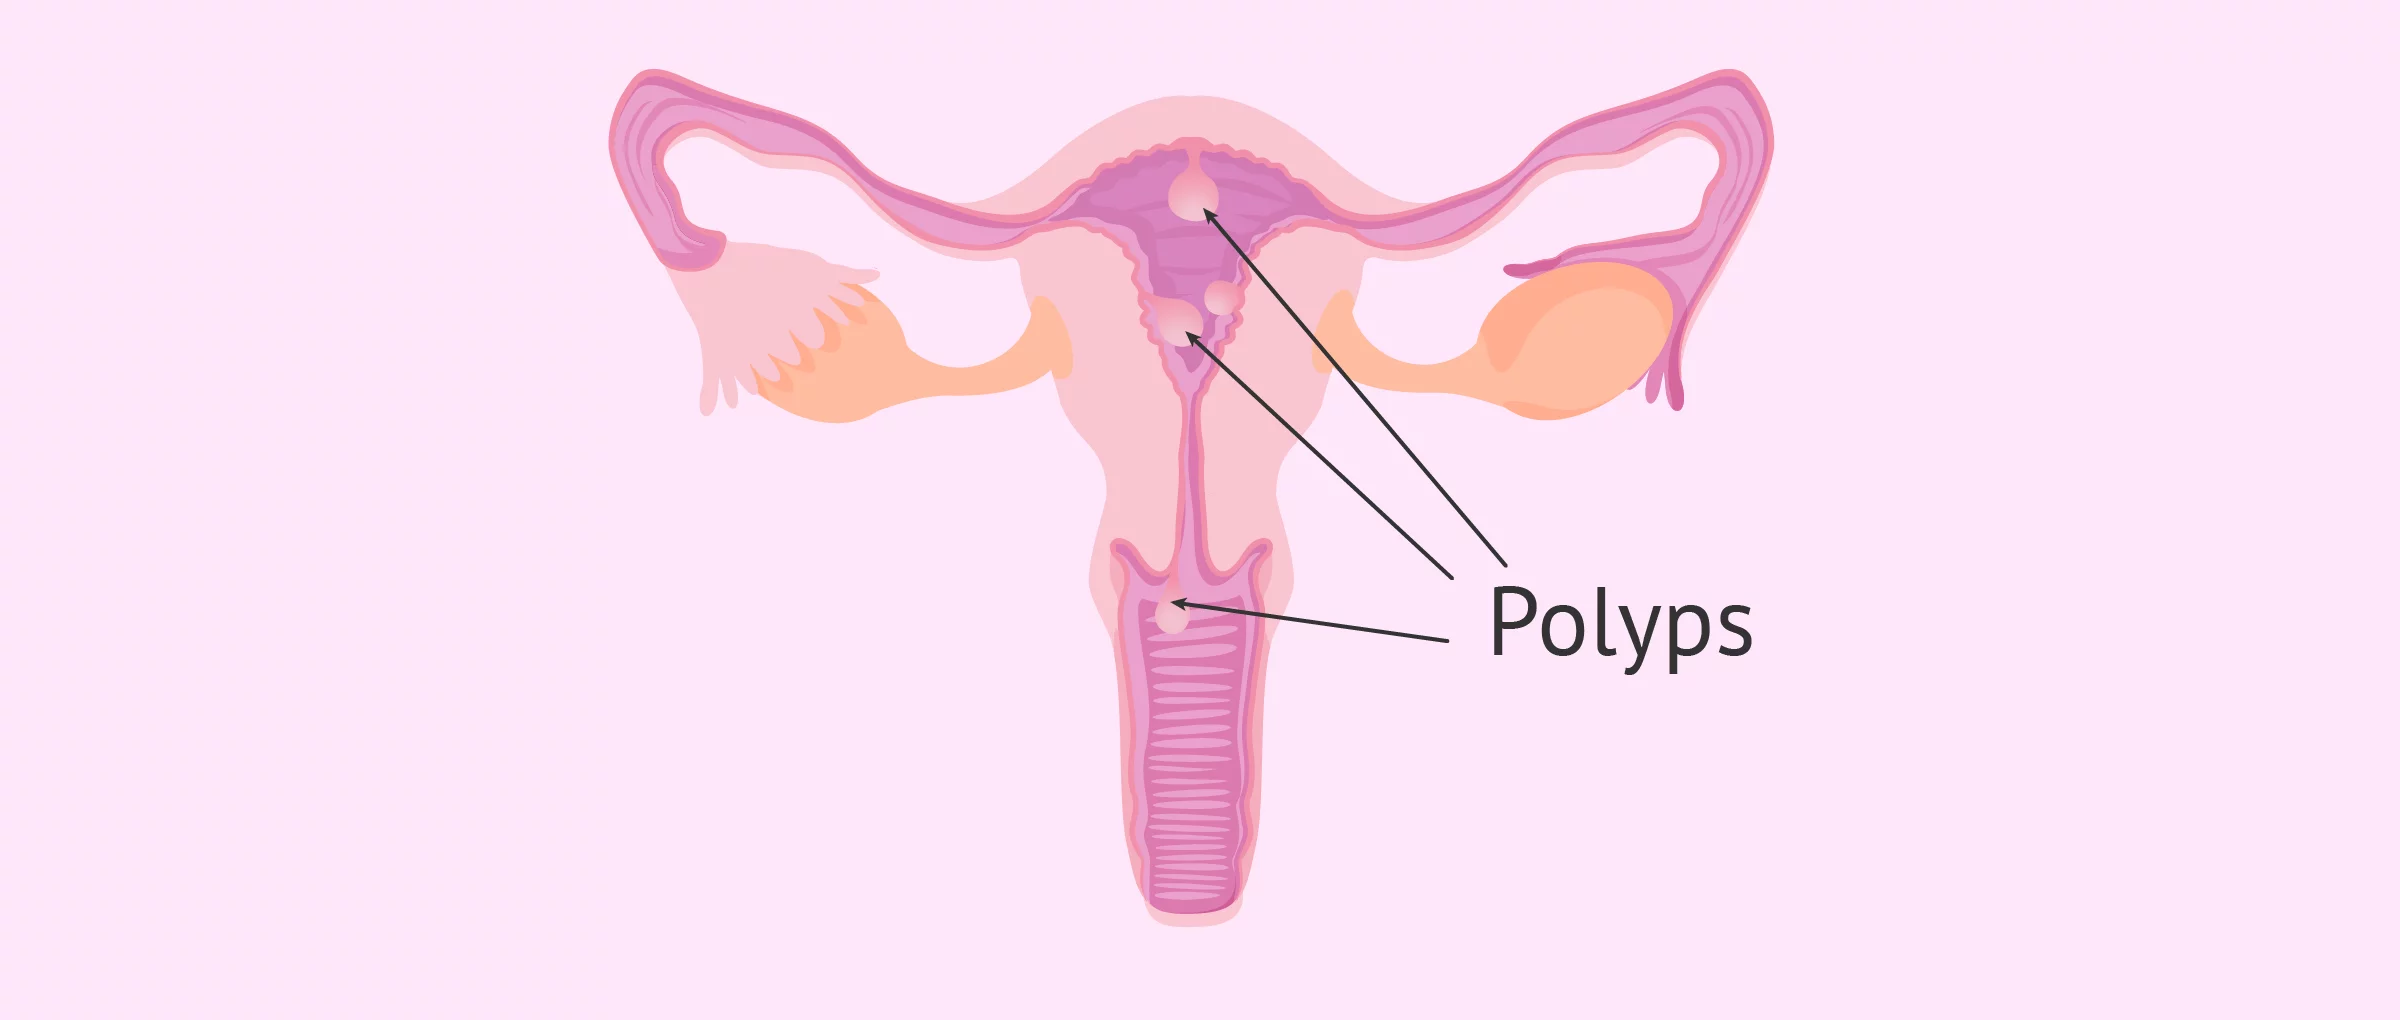 Endometrial Polyps